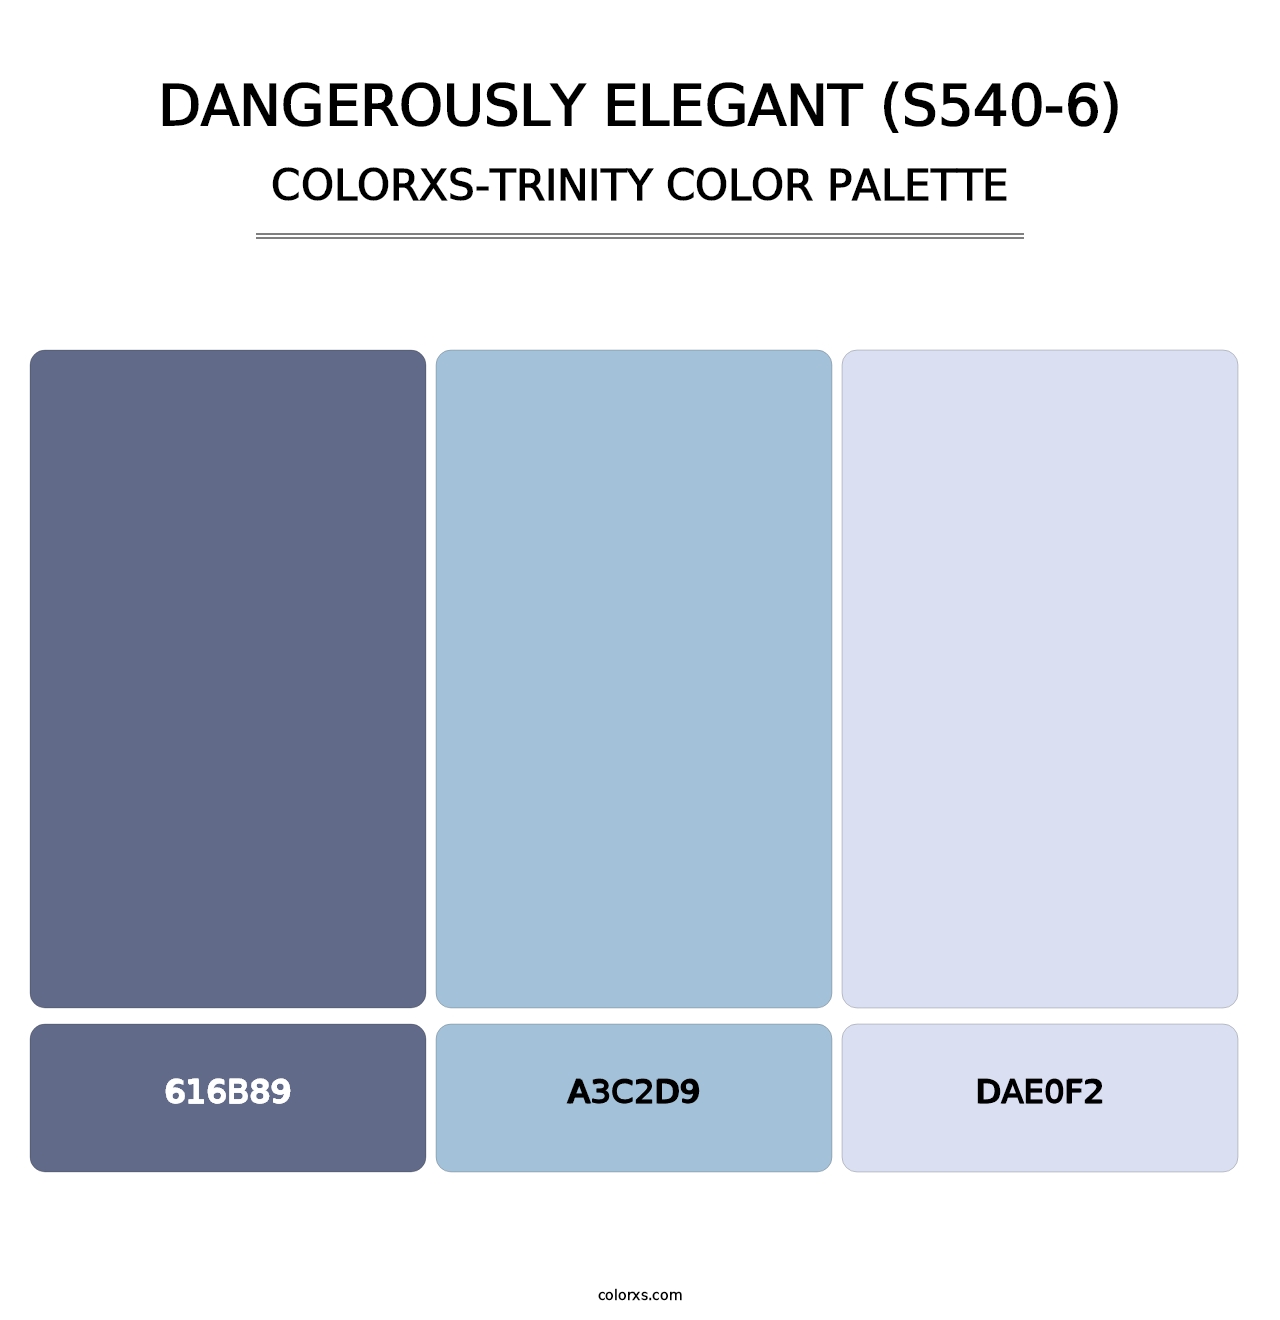 Dangerously Elegant (S540-6) - Colorxs Trinity Palette